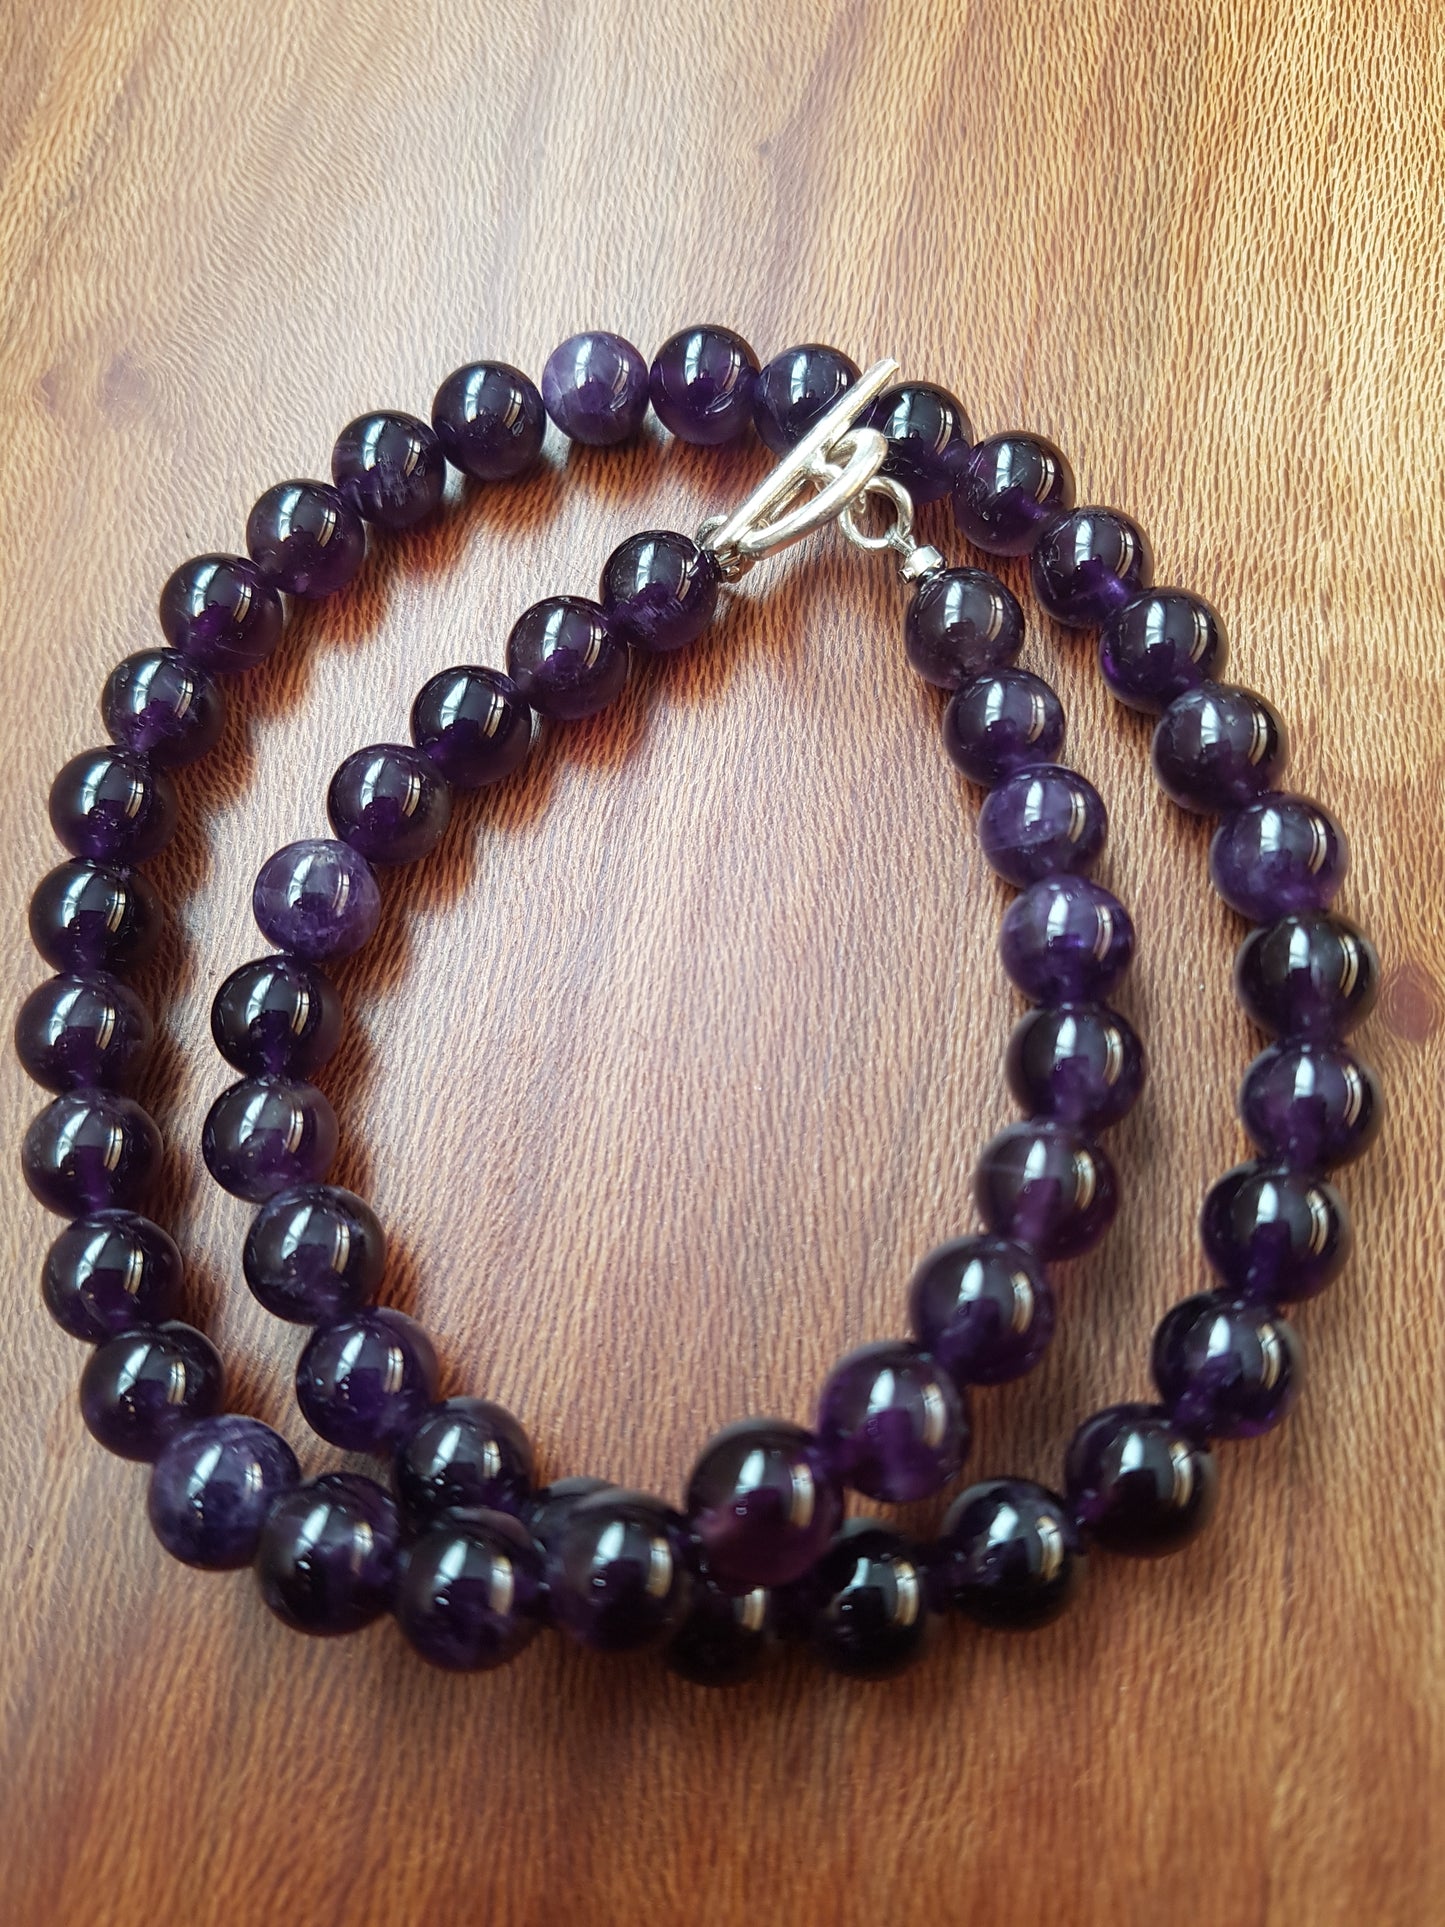 Amethyst necklace 8mm